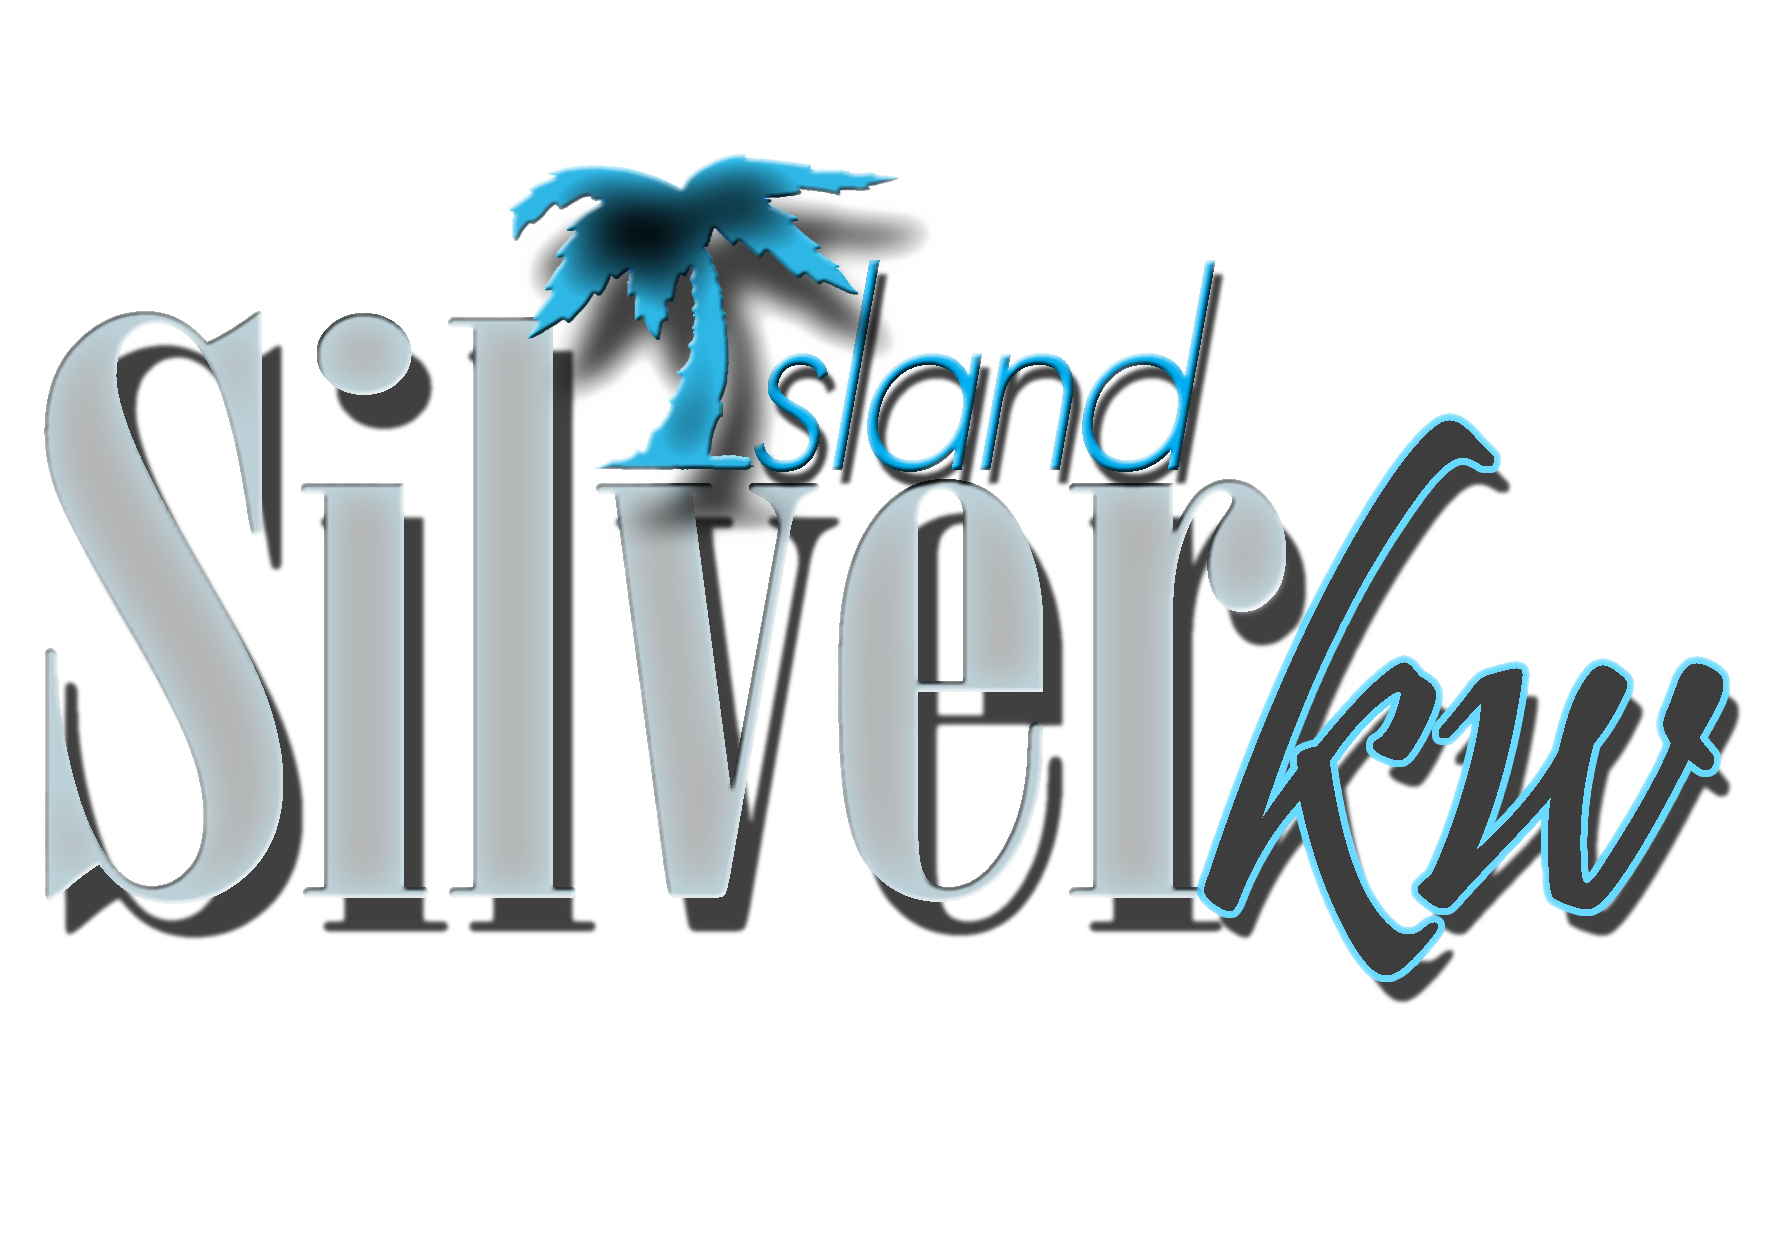 Island Silver kw logo